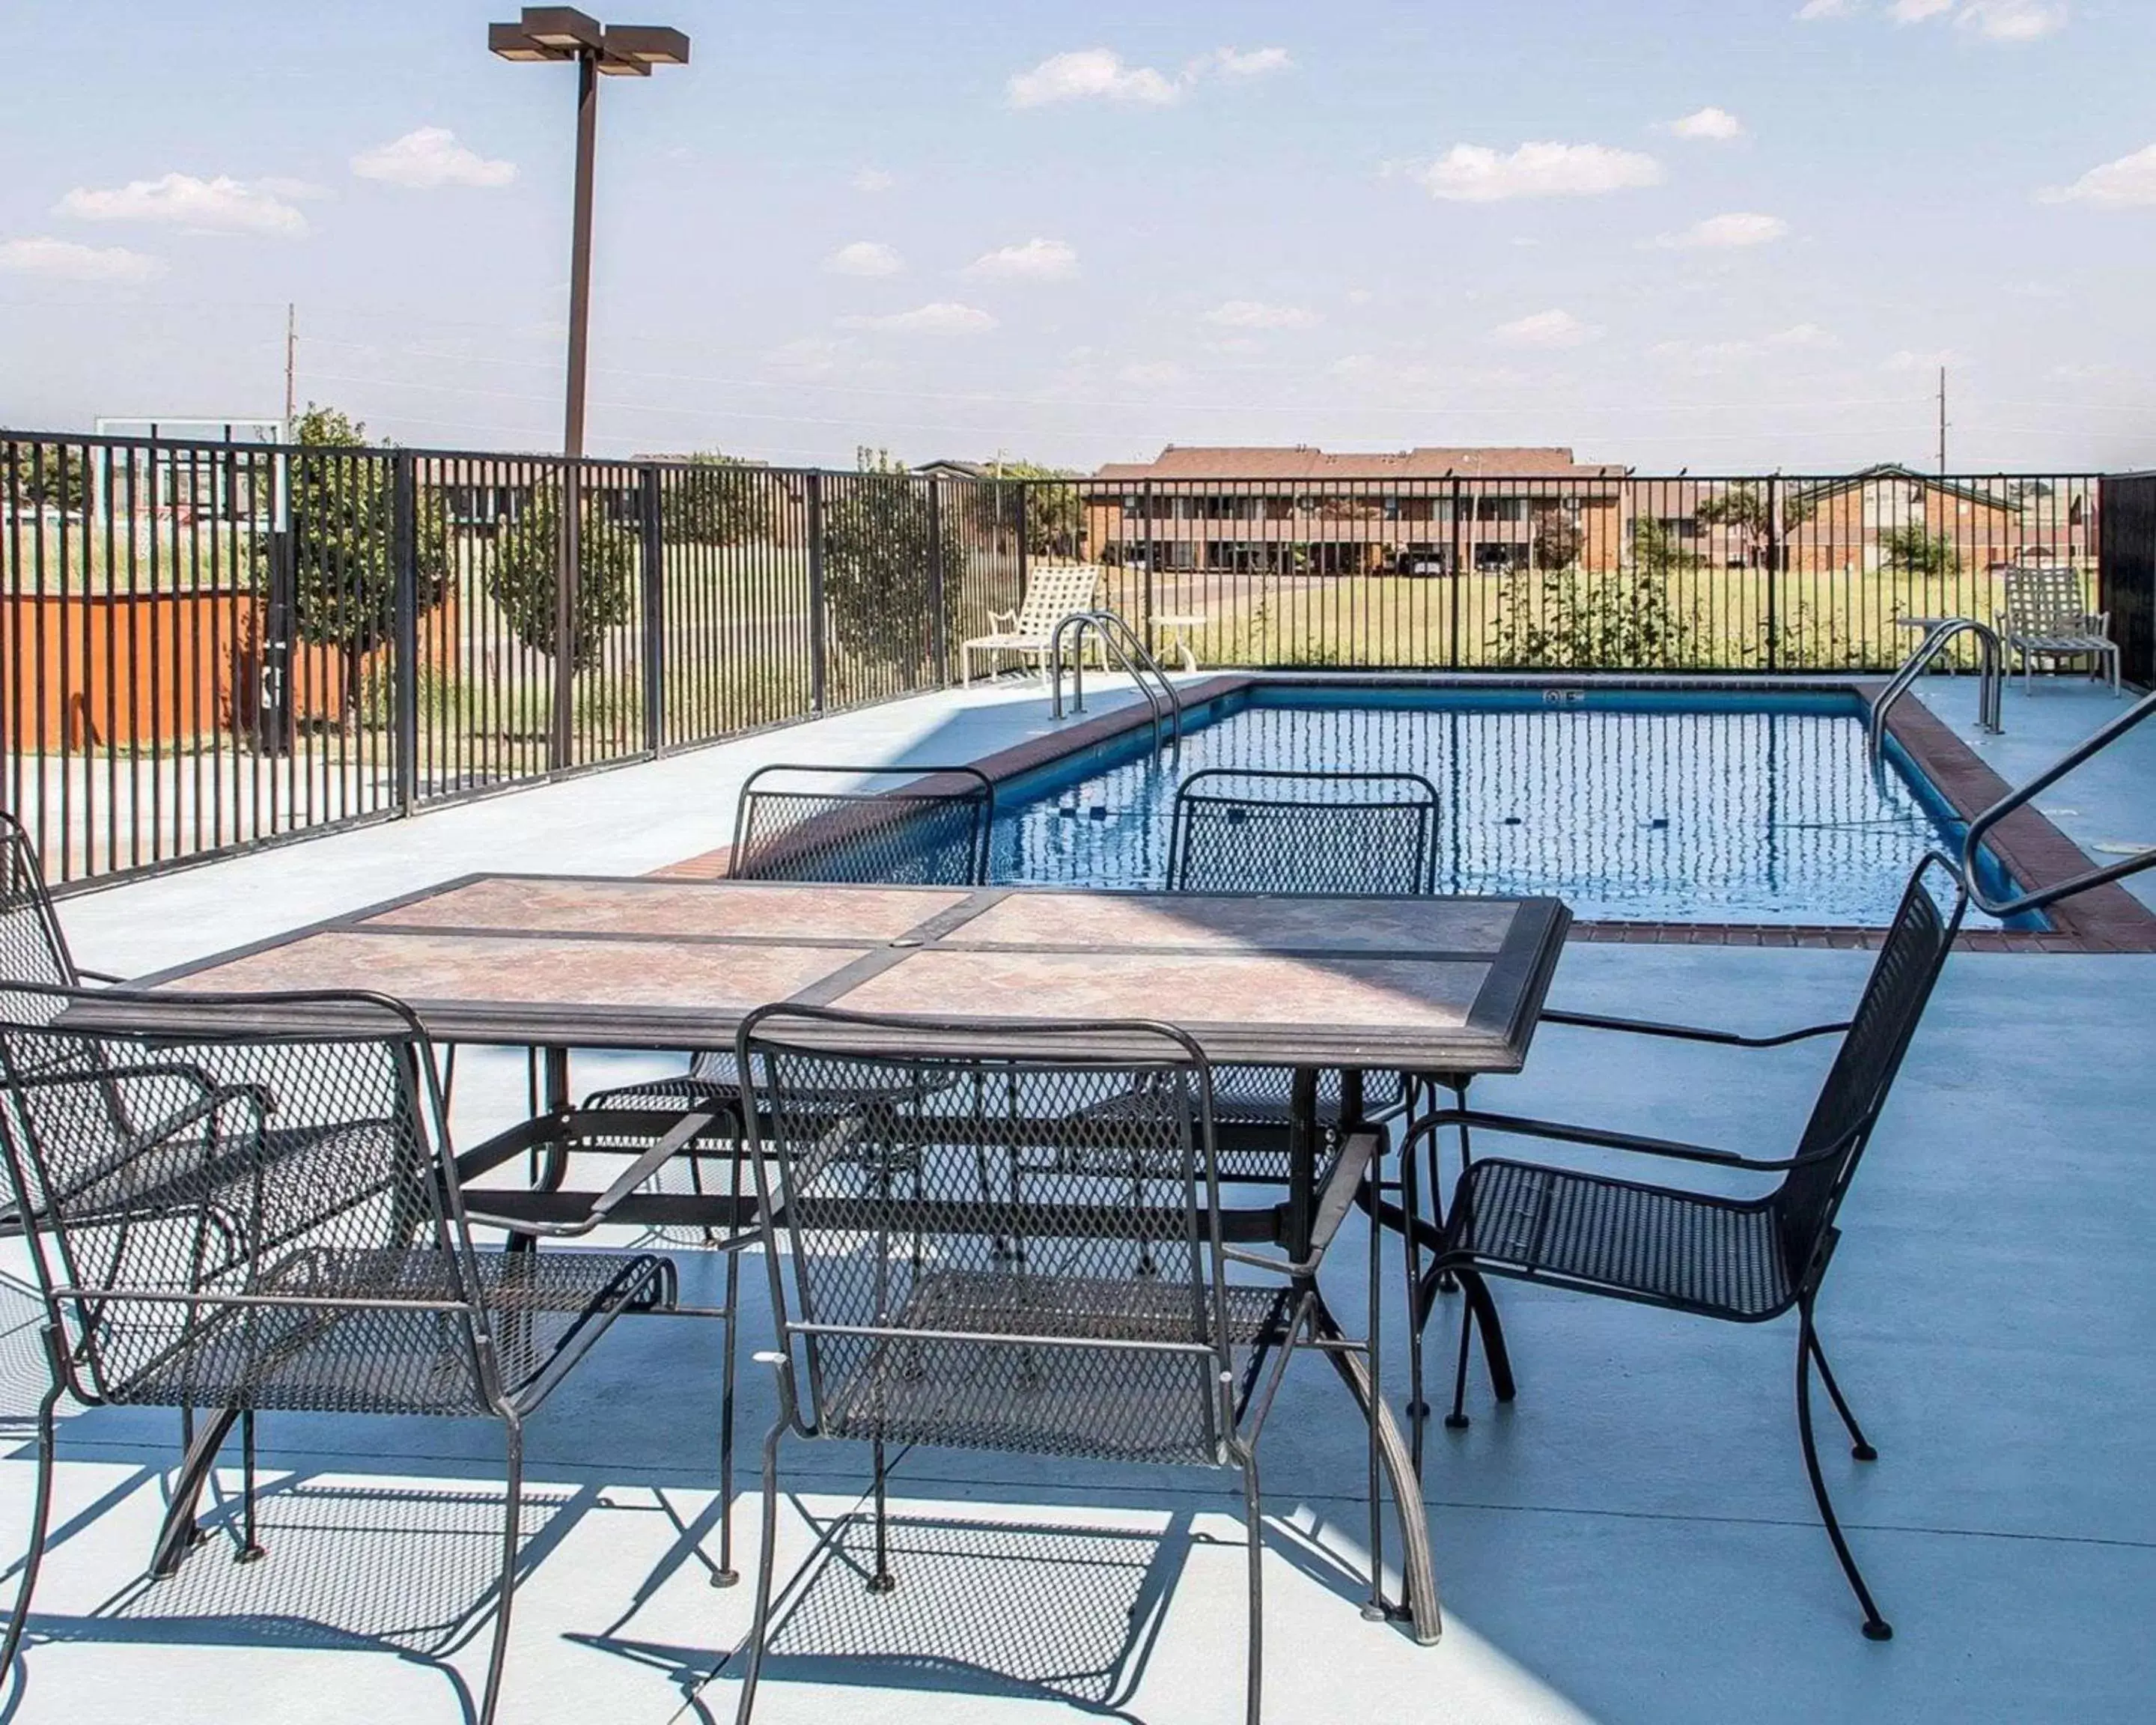 On site, Swimming Pool in Comfort Inn & Suites